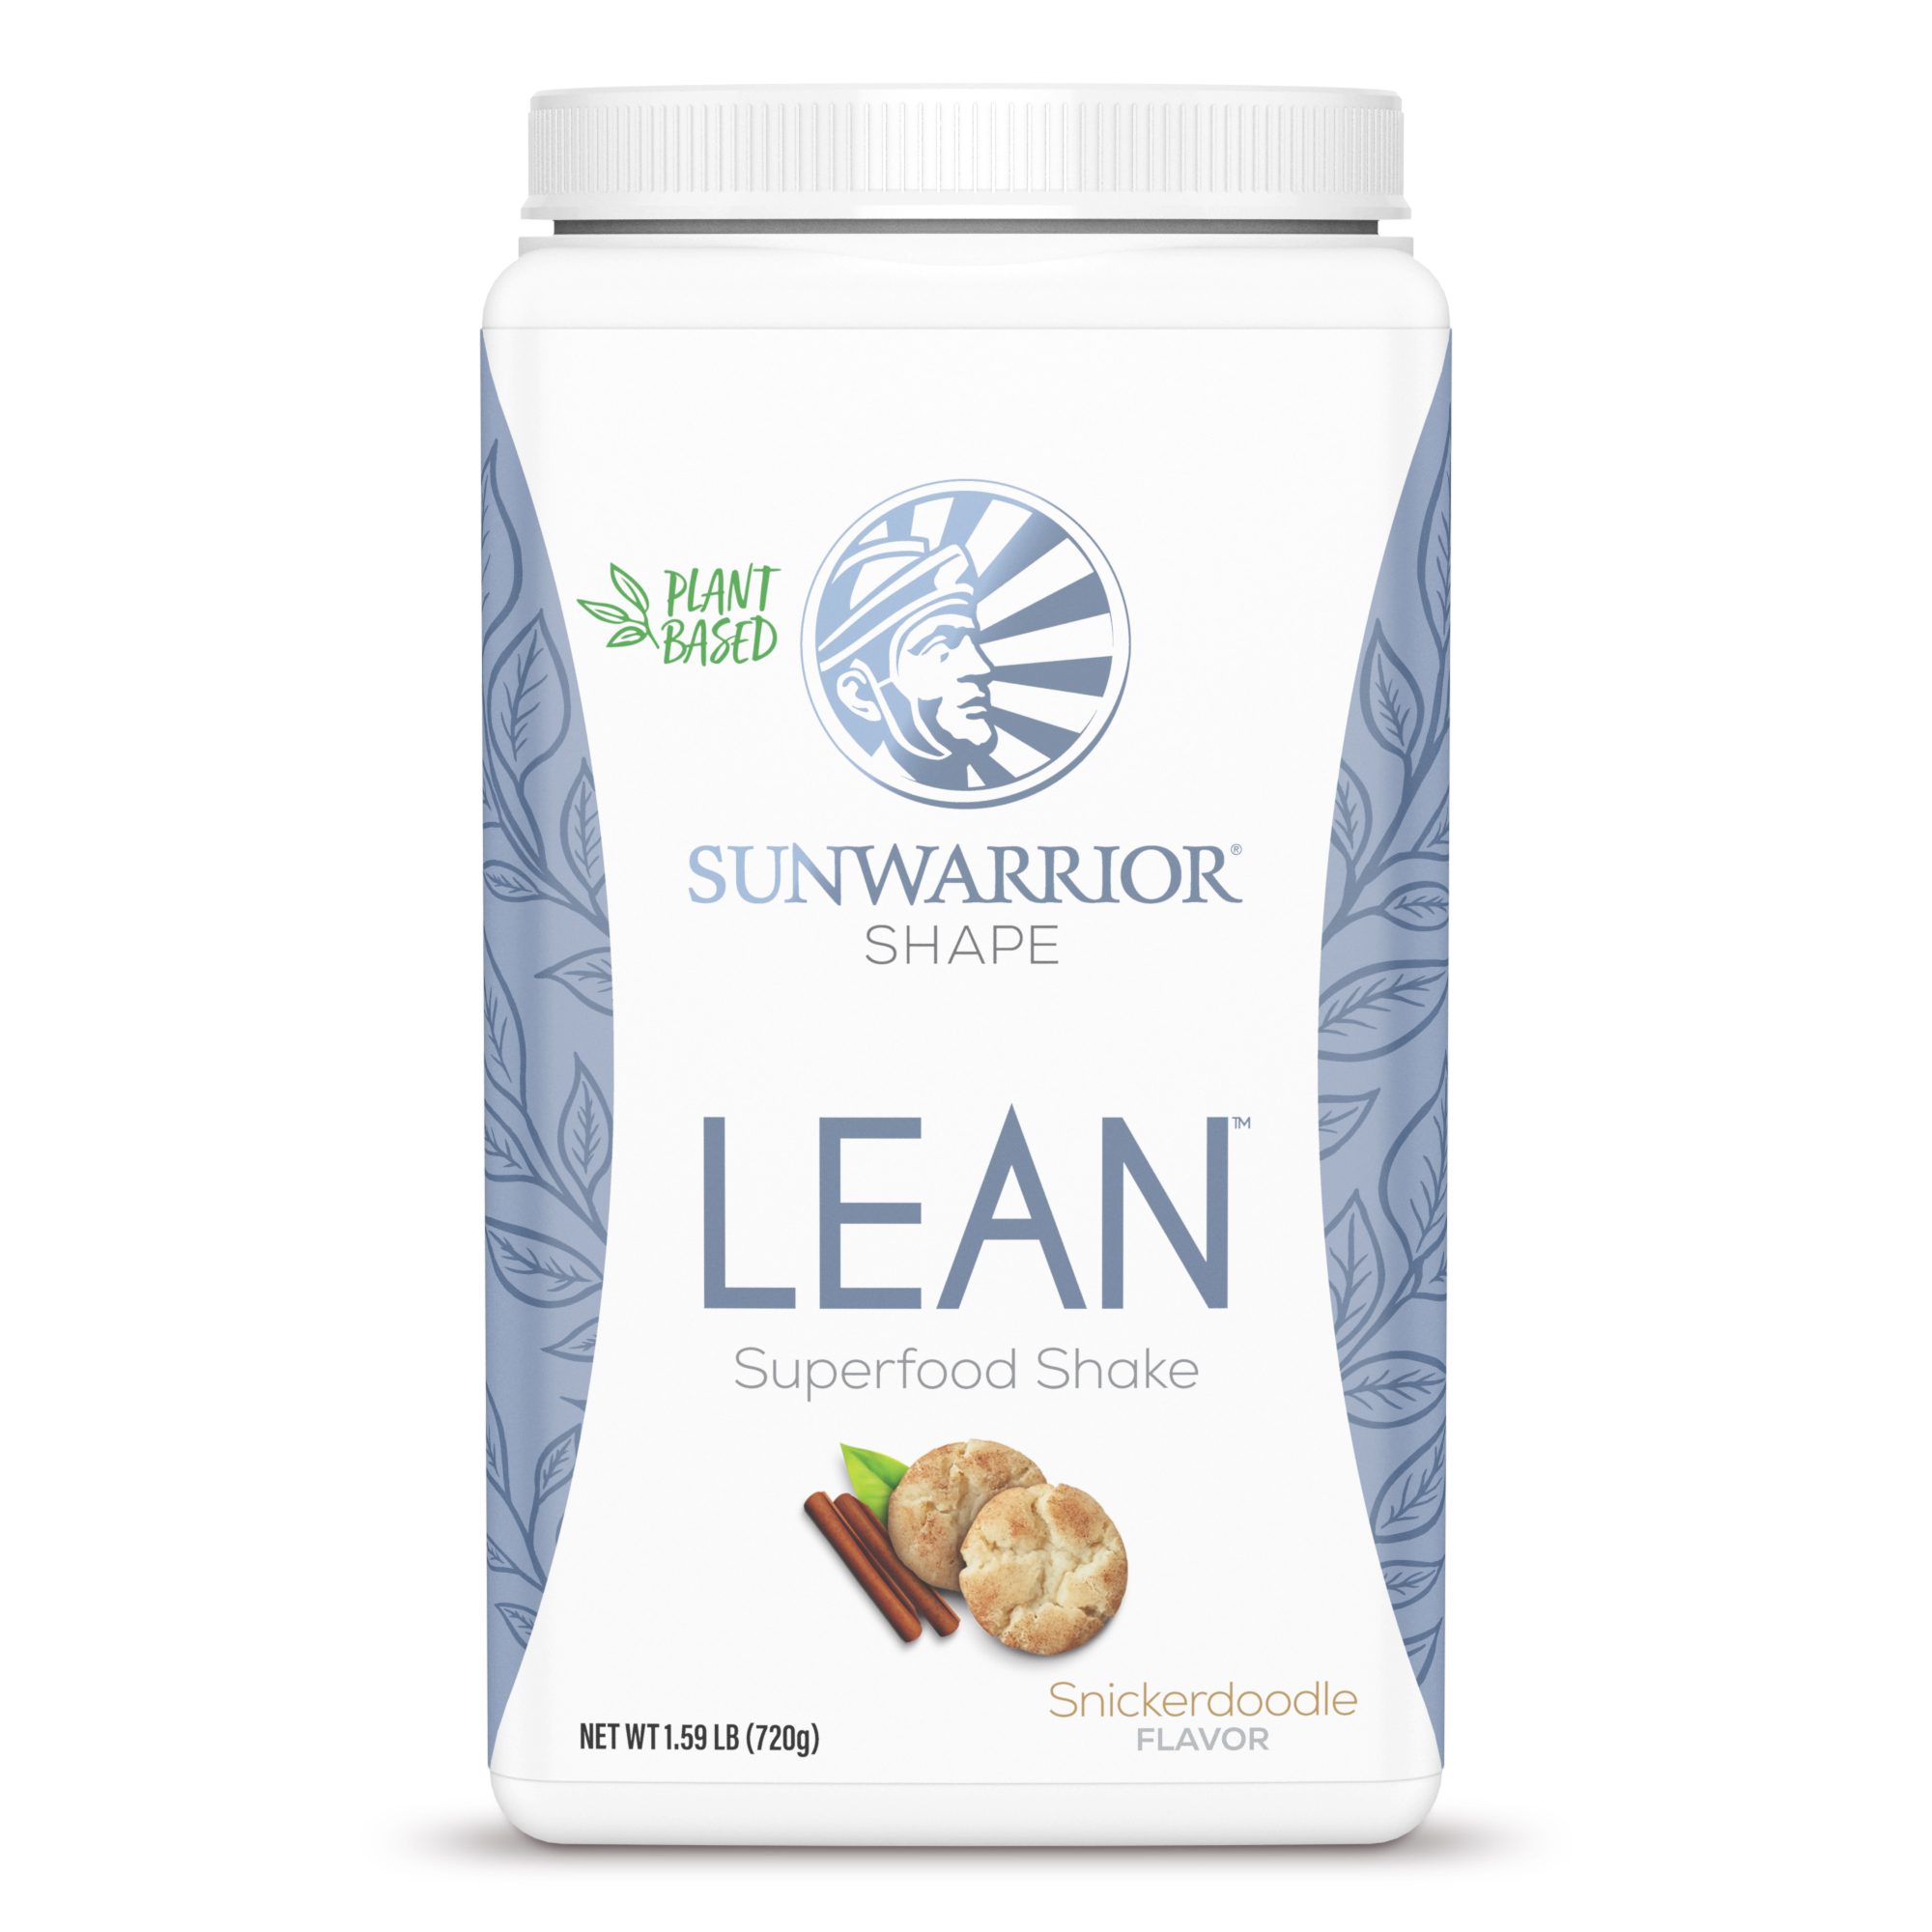 Sunwarrior Shape – Lean Superfood Shake – Snickerdoodle – 720g (replacing Lean Meal Illumin8)